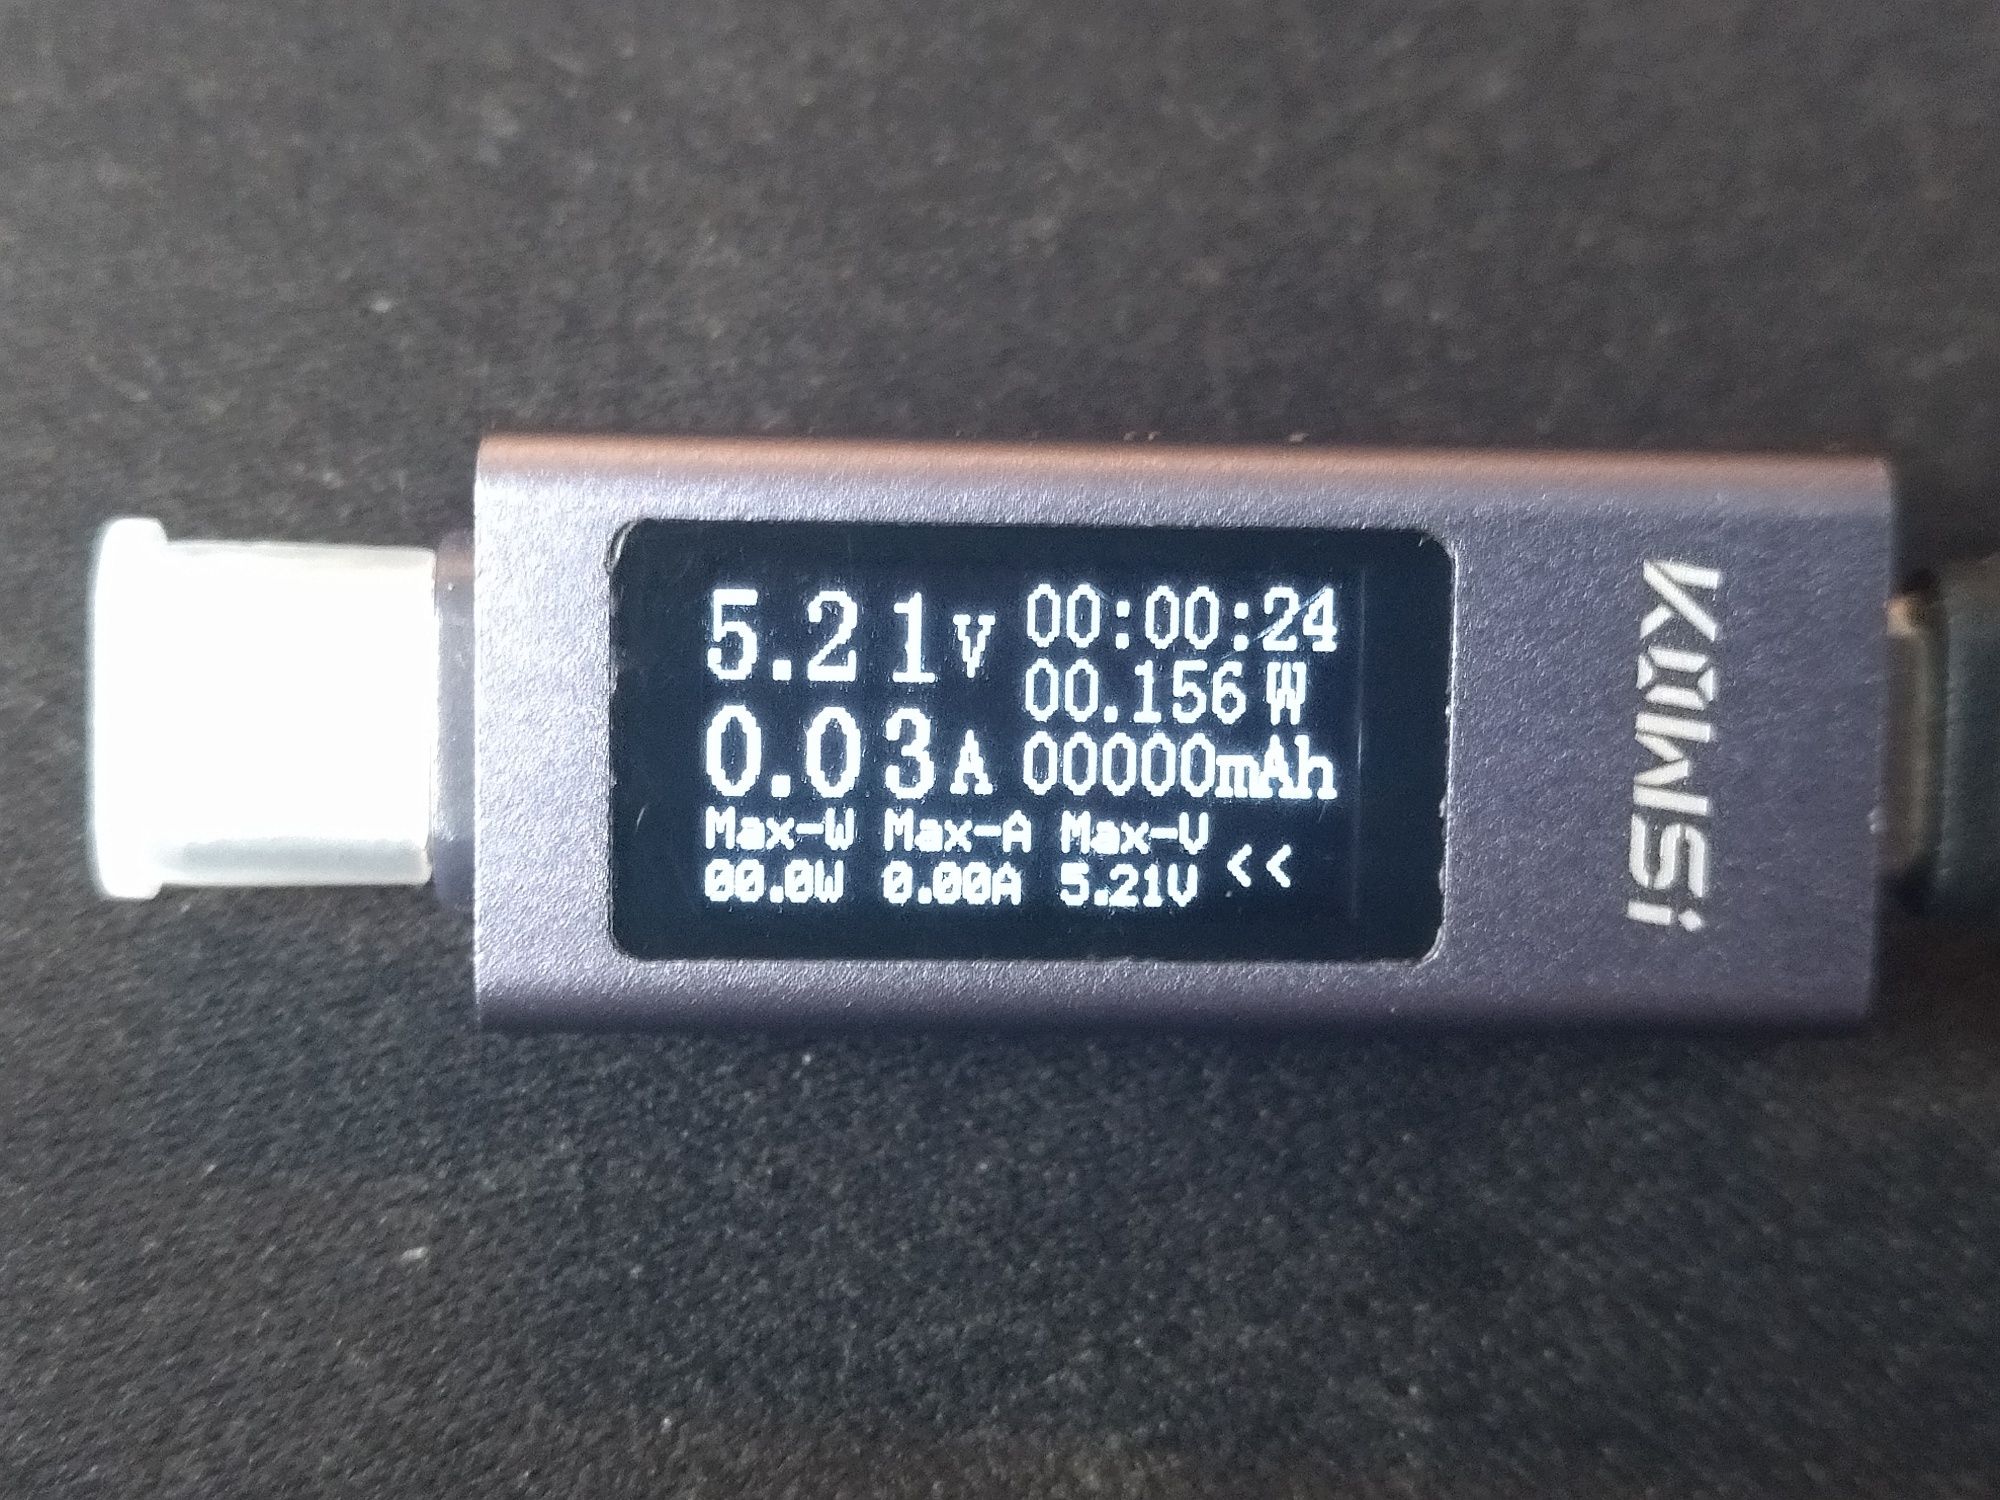 KWS-2301C USB Type c tester